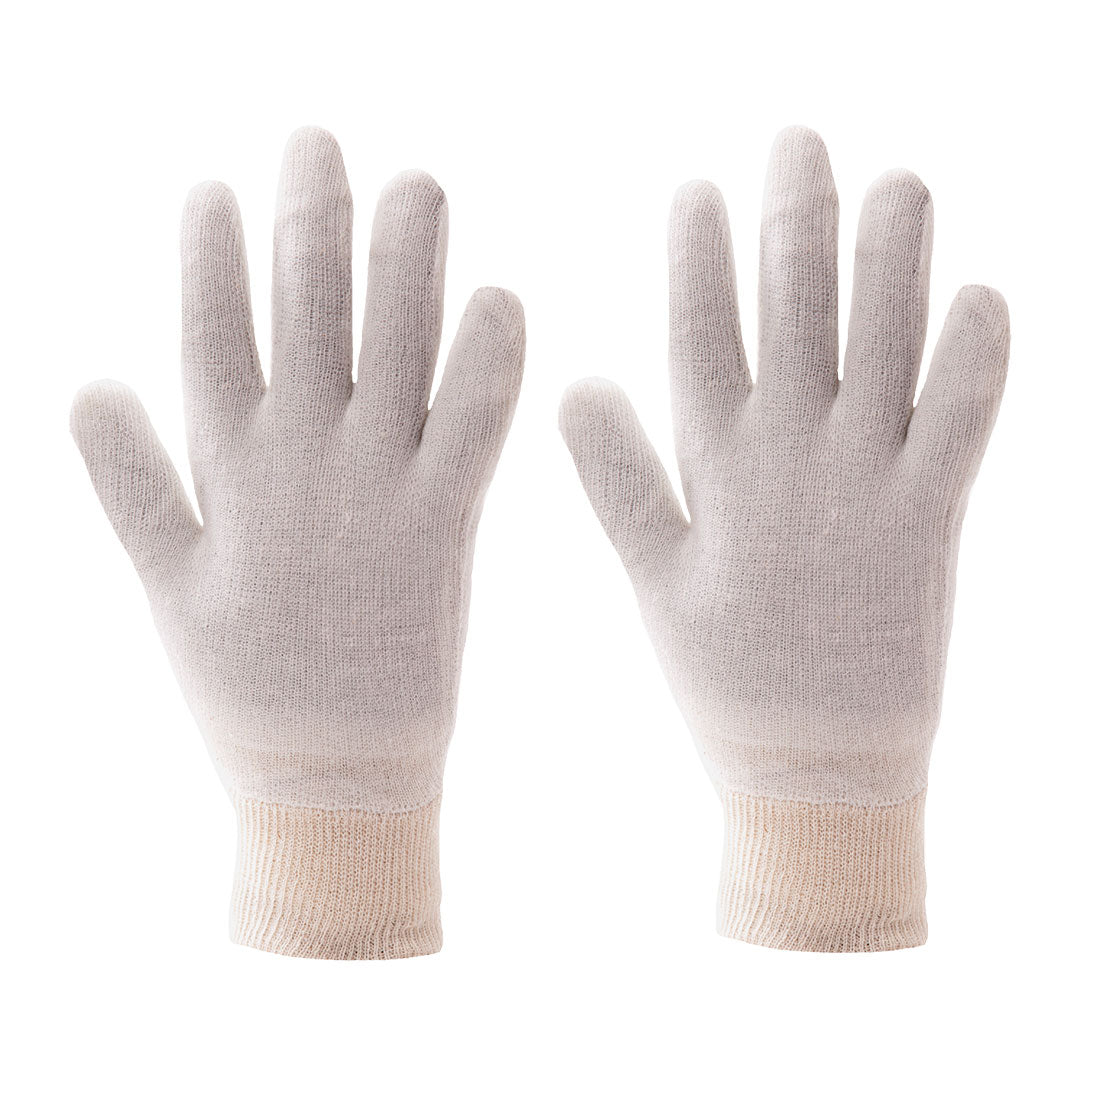 Stockinette Knitwrist Glove (600 Pairs)  (A050)